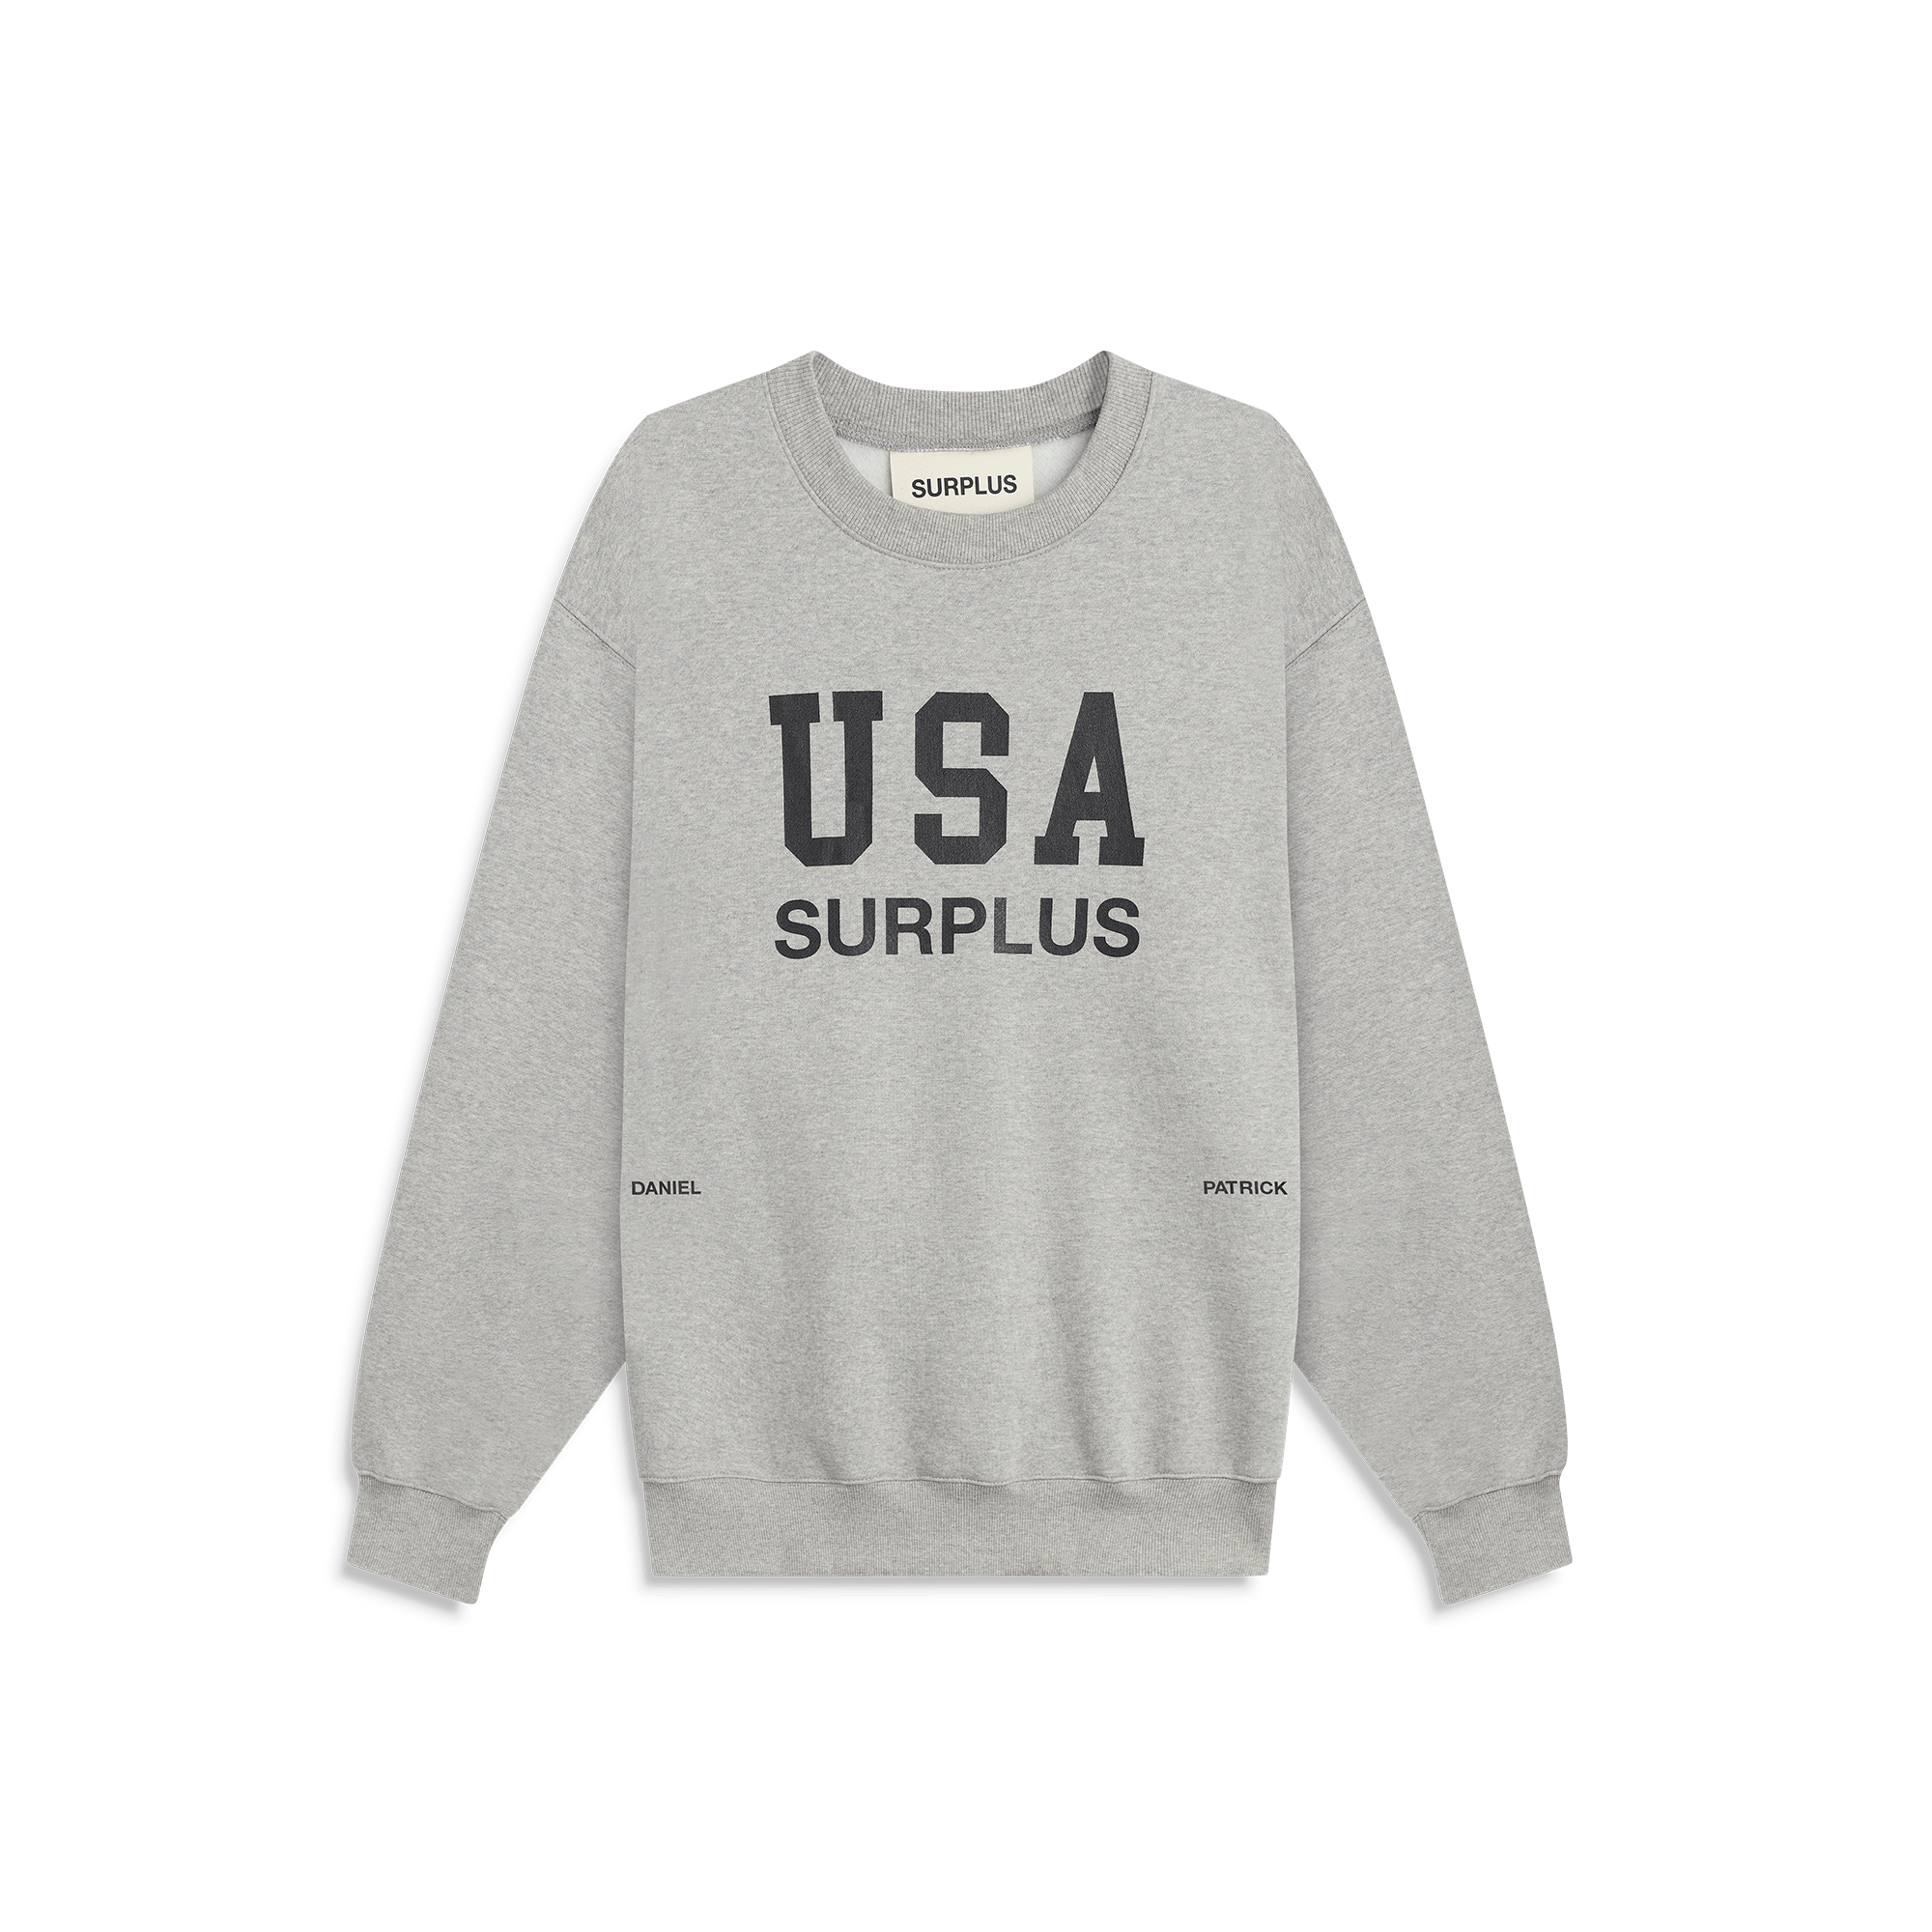 USA surplus crewneck / heather grey + black